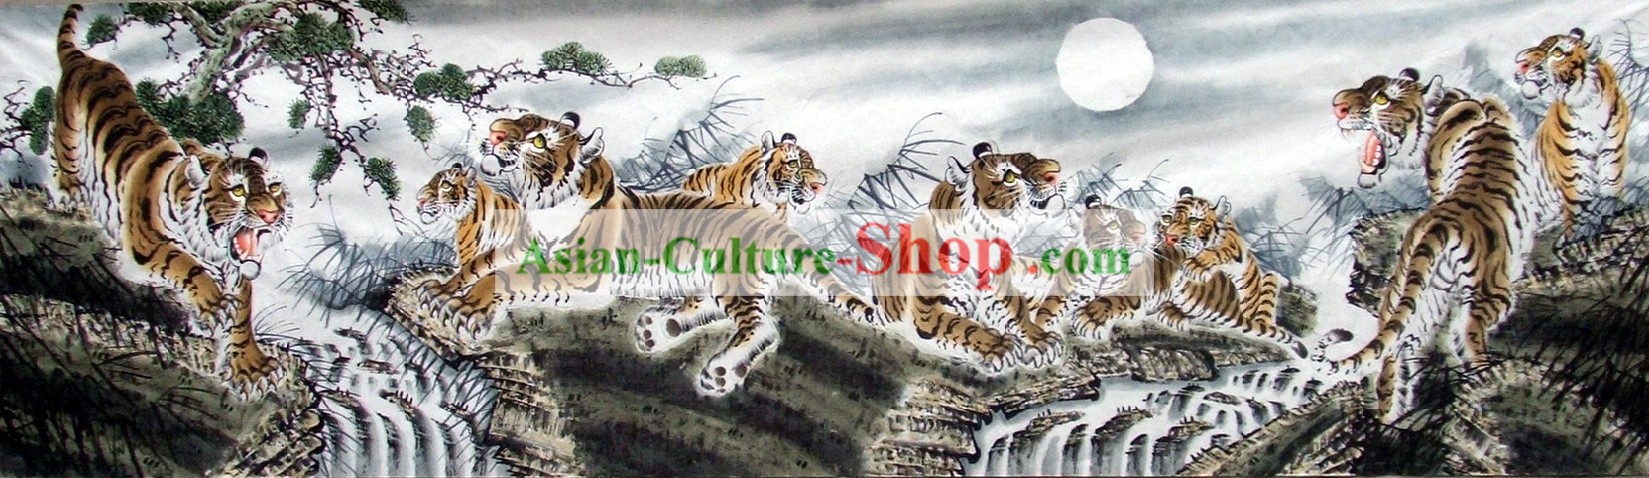 Traditional Chinese Tiger King Family Painting by Wang Yongchang